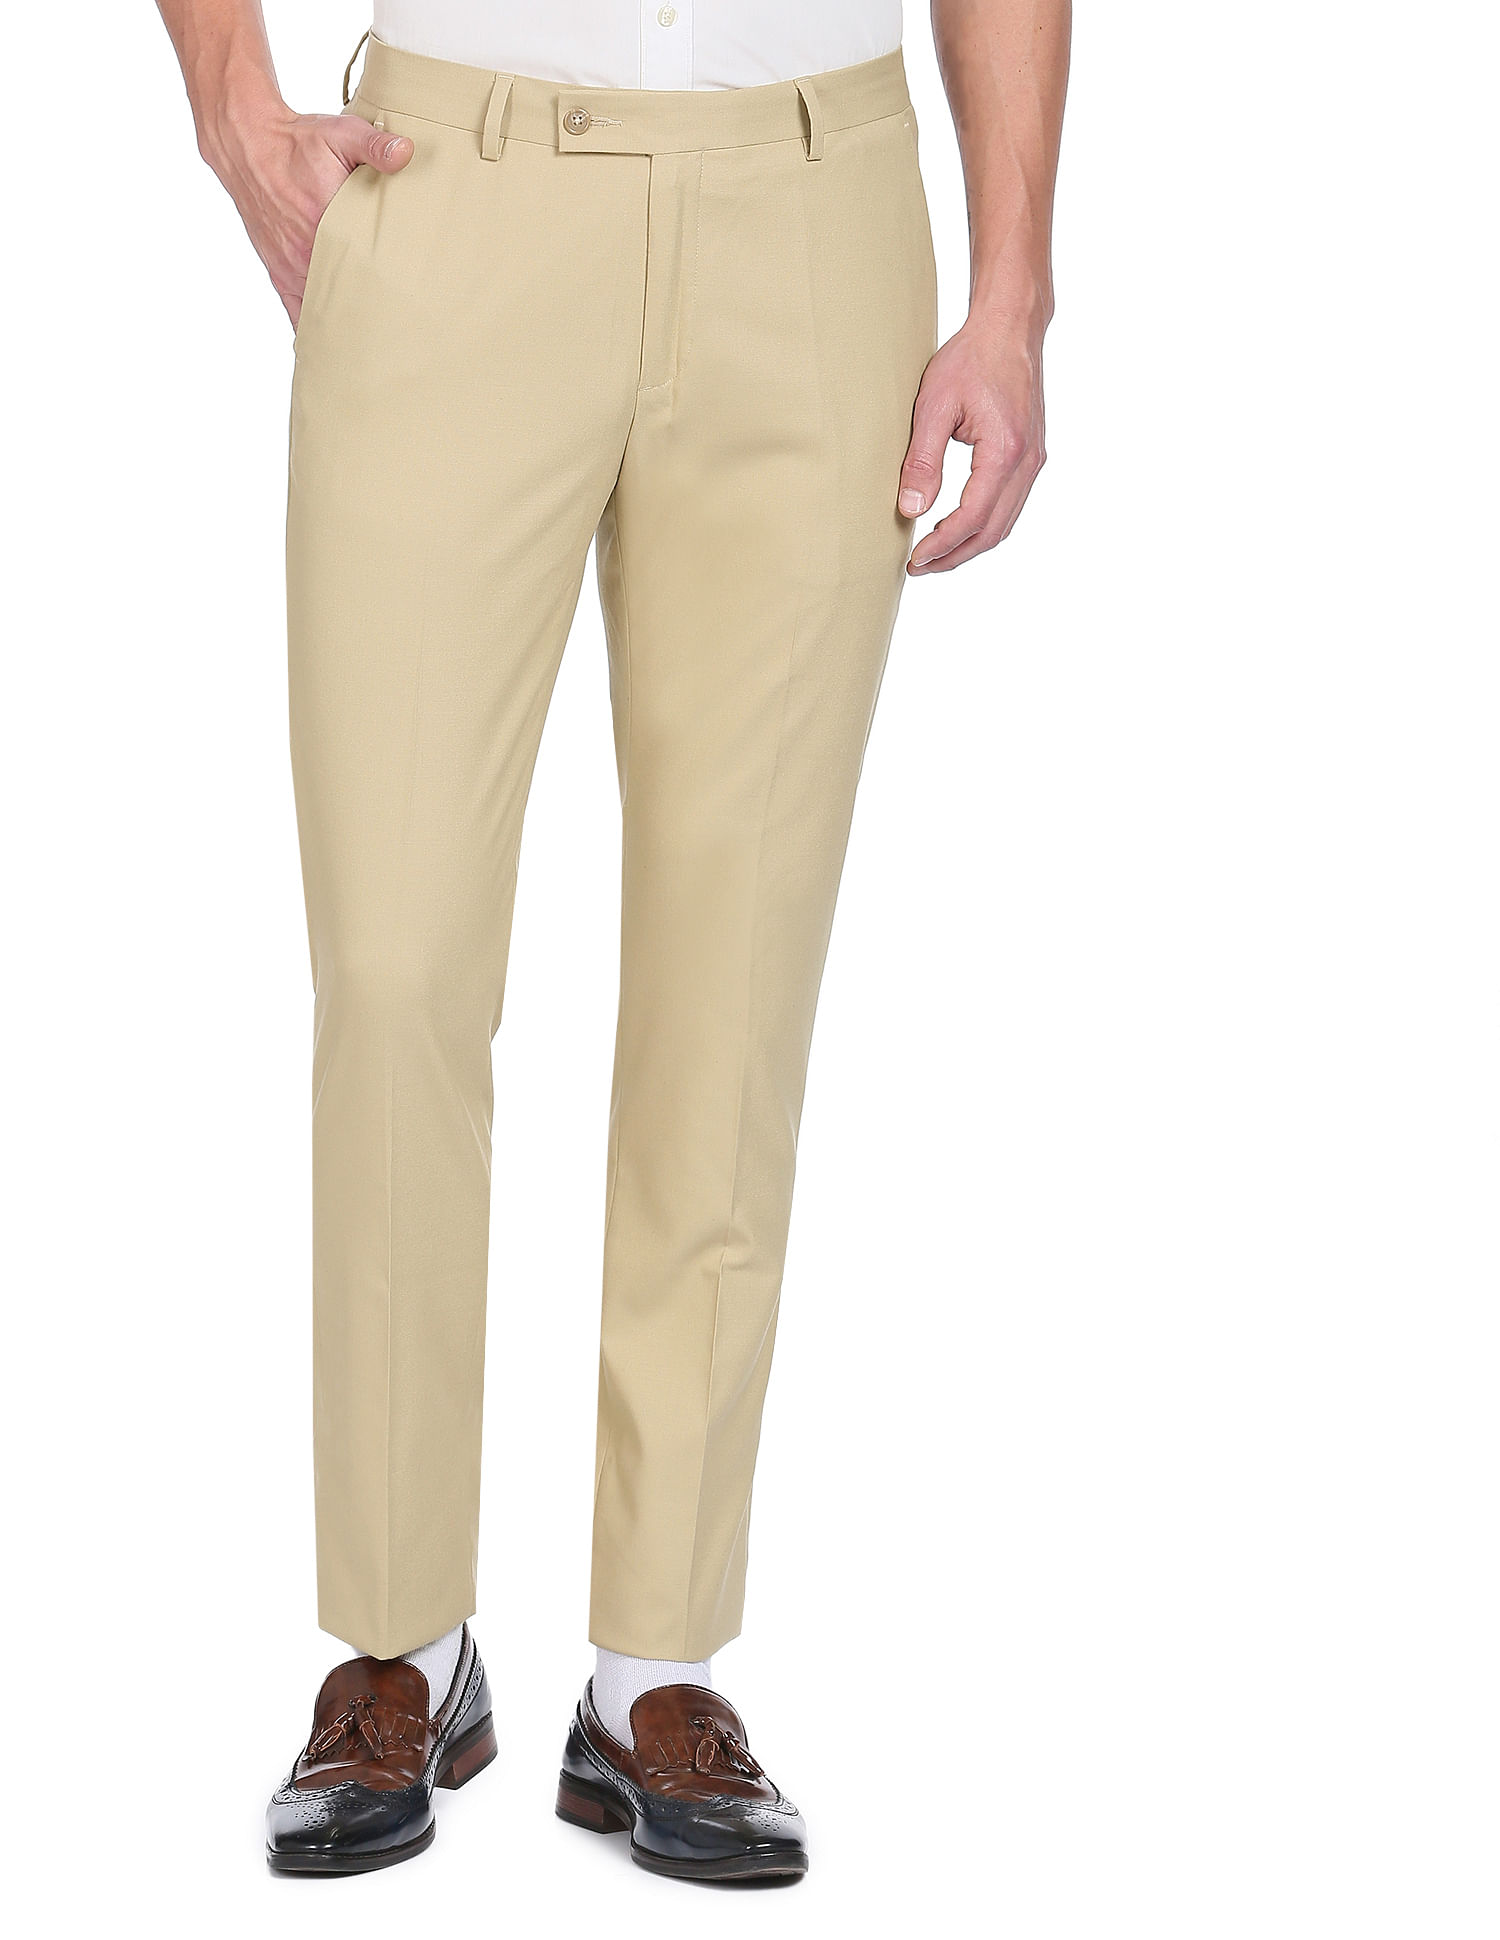 Arrow Men's Modern Fit Dress Pants - Grey, Size: 42x32, Black | eBay